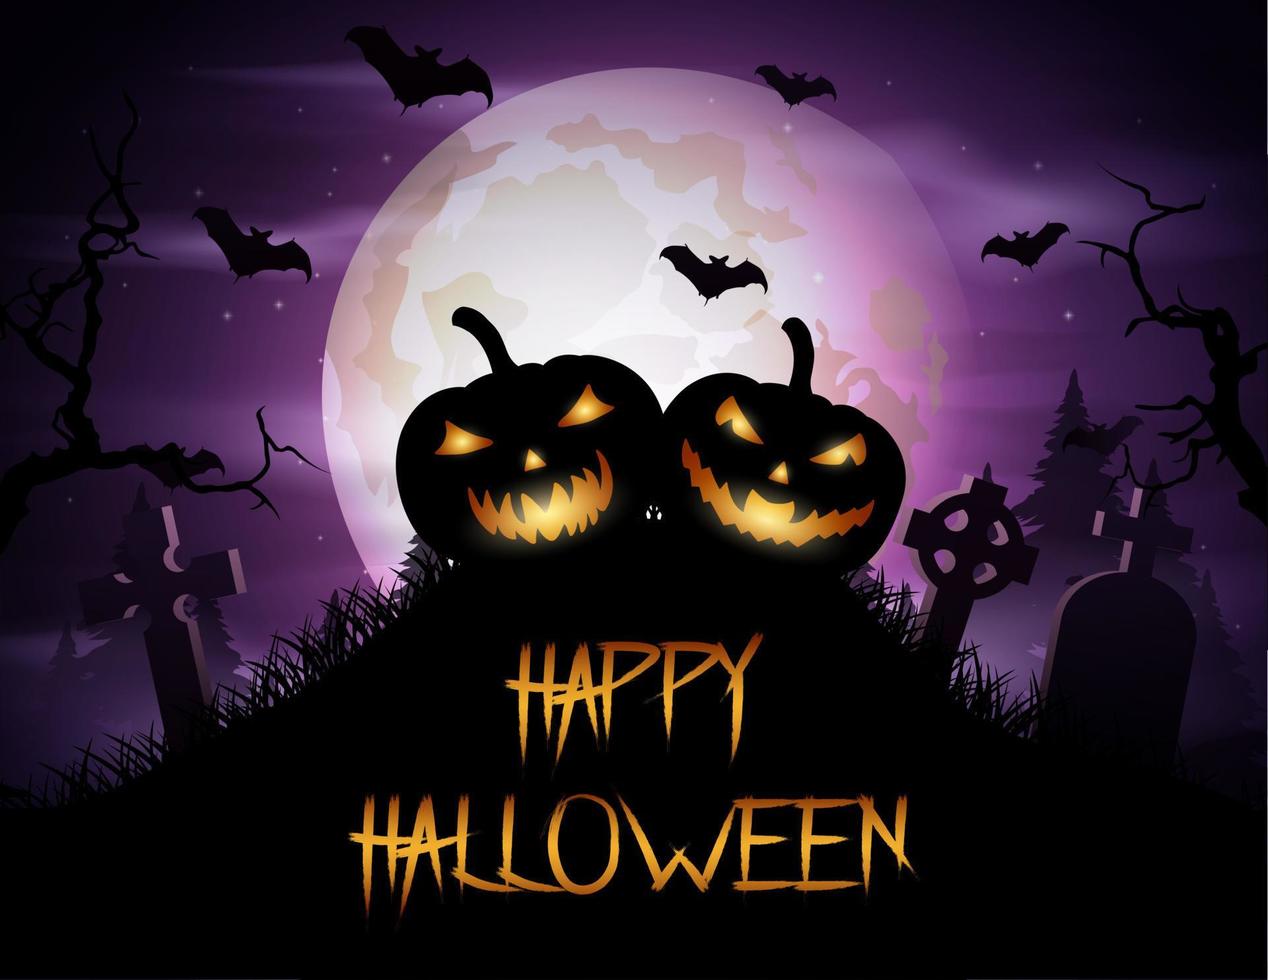 Halloween background with pumpkins on graveyard vector